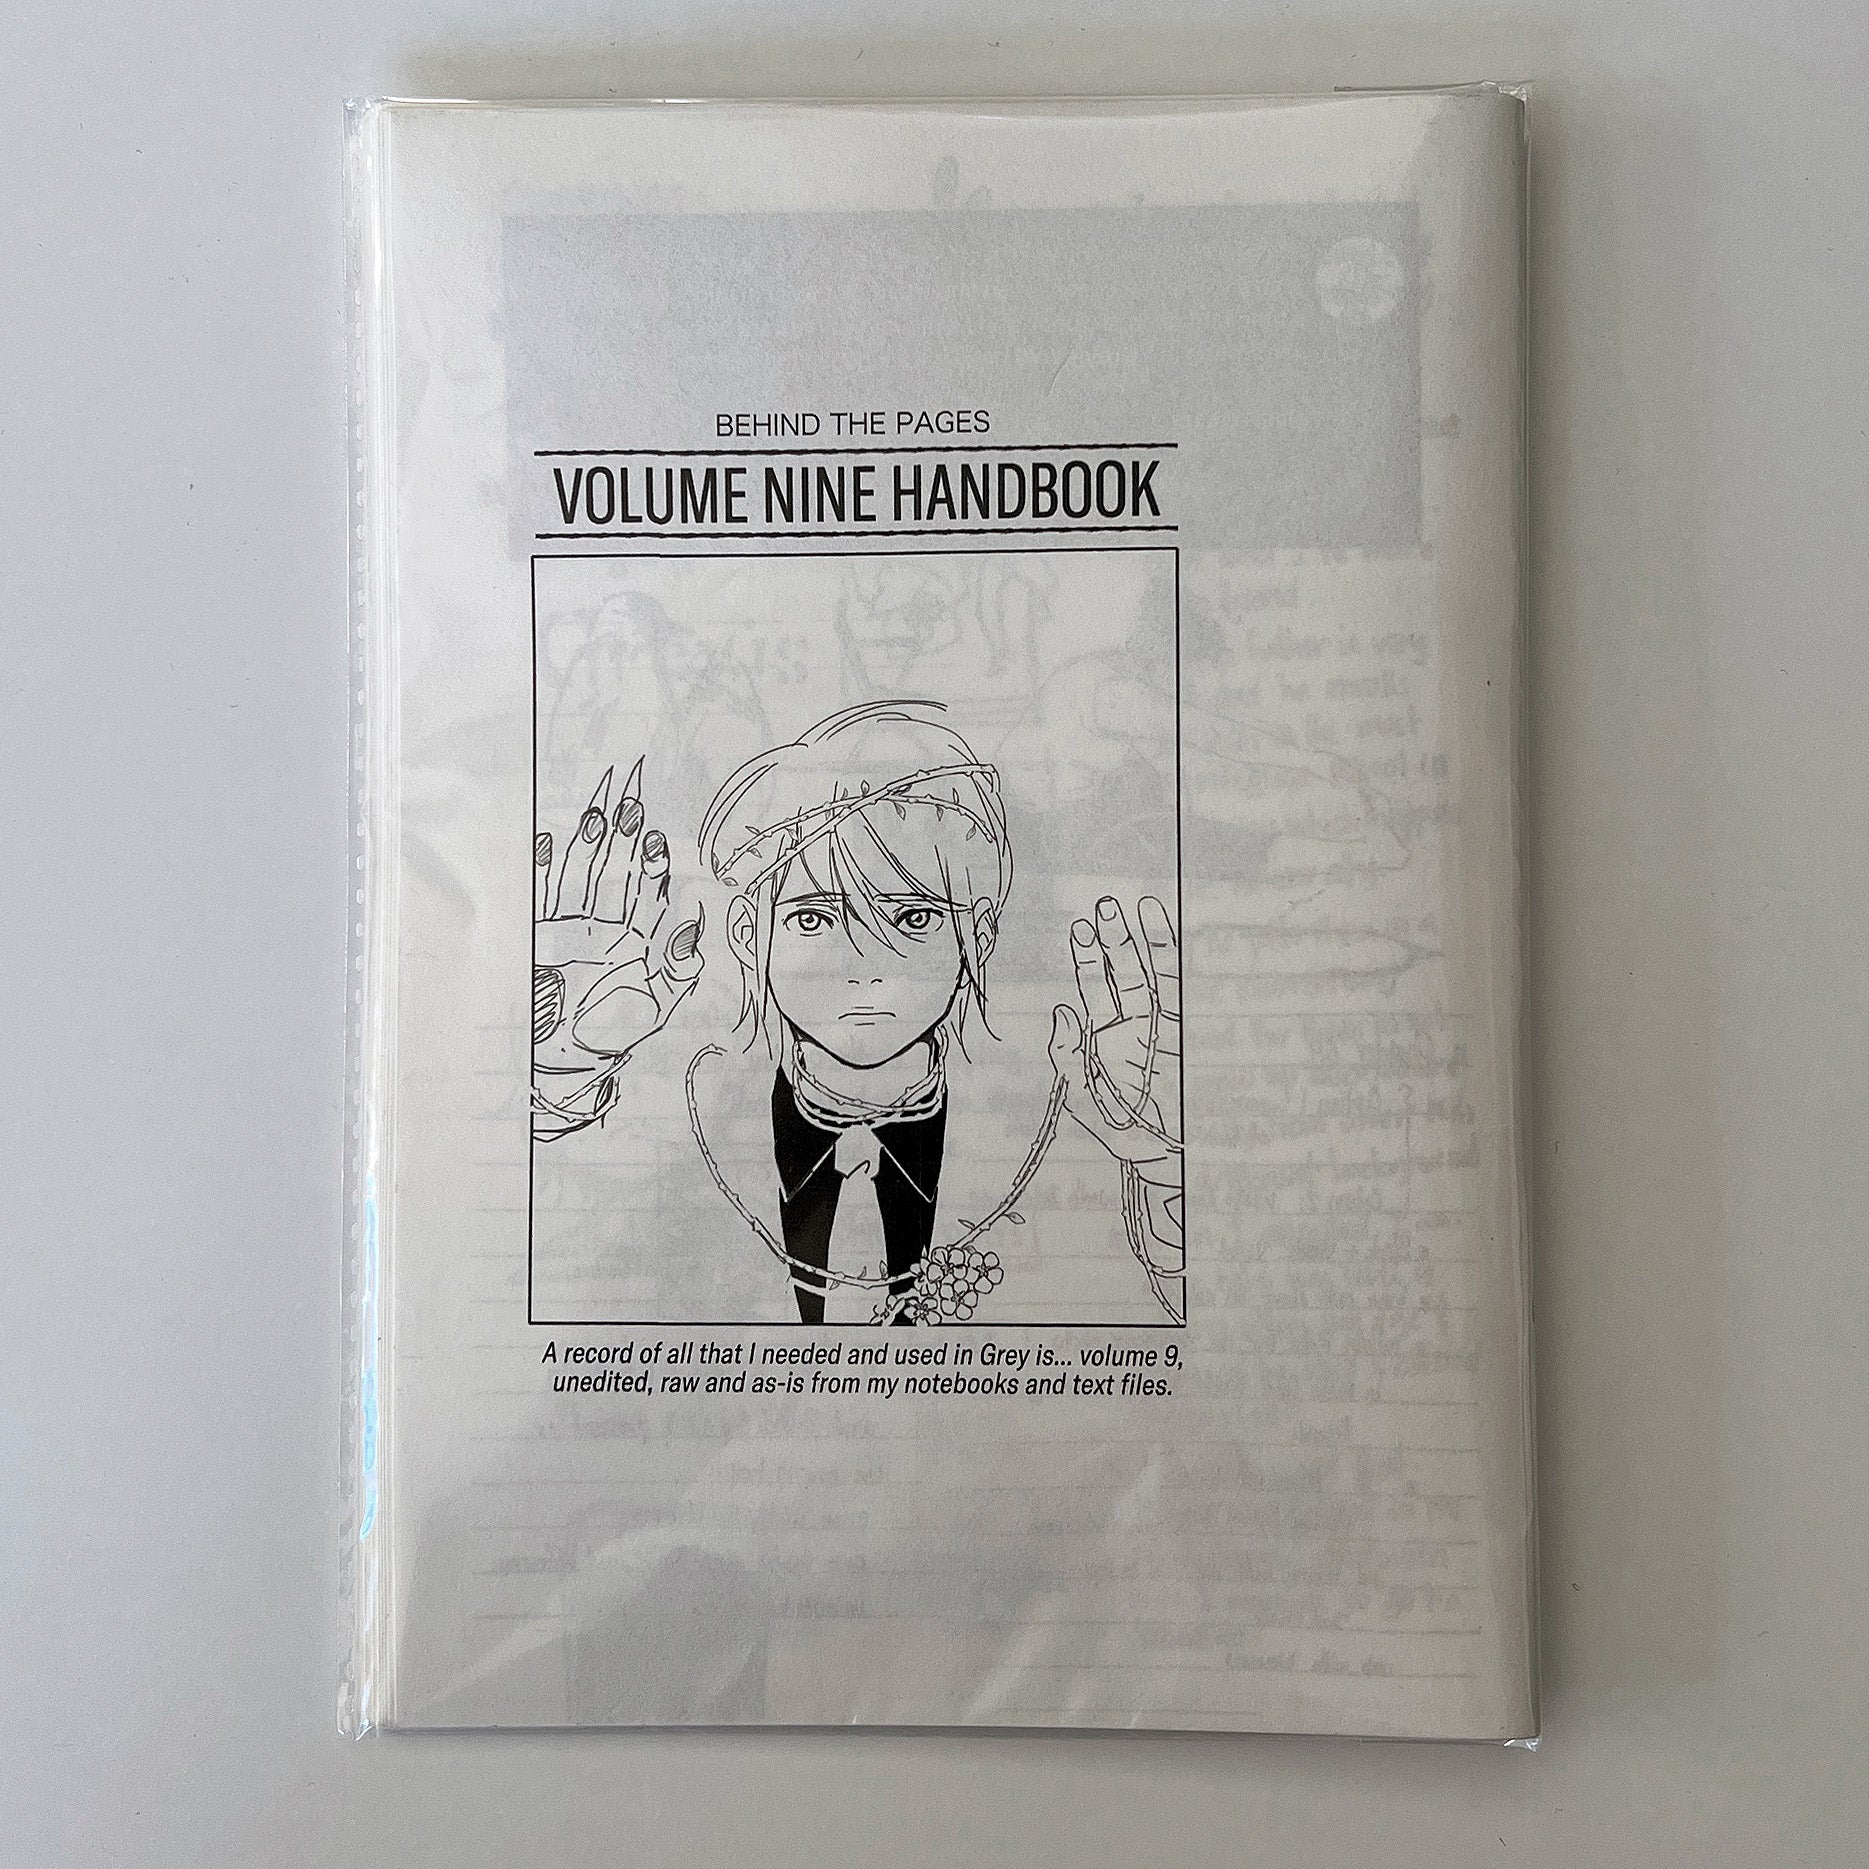 [Booklet] Grey is... Volume 9 Handbook